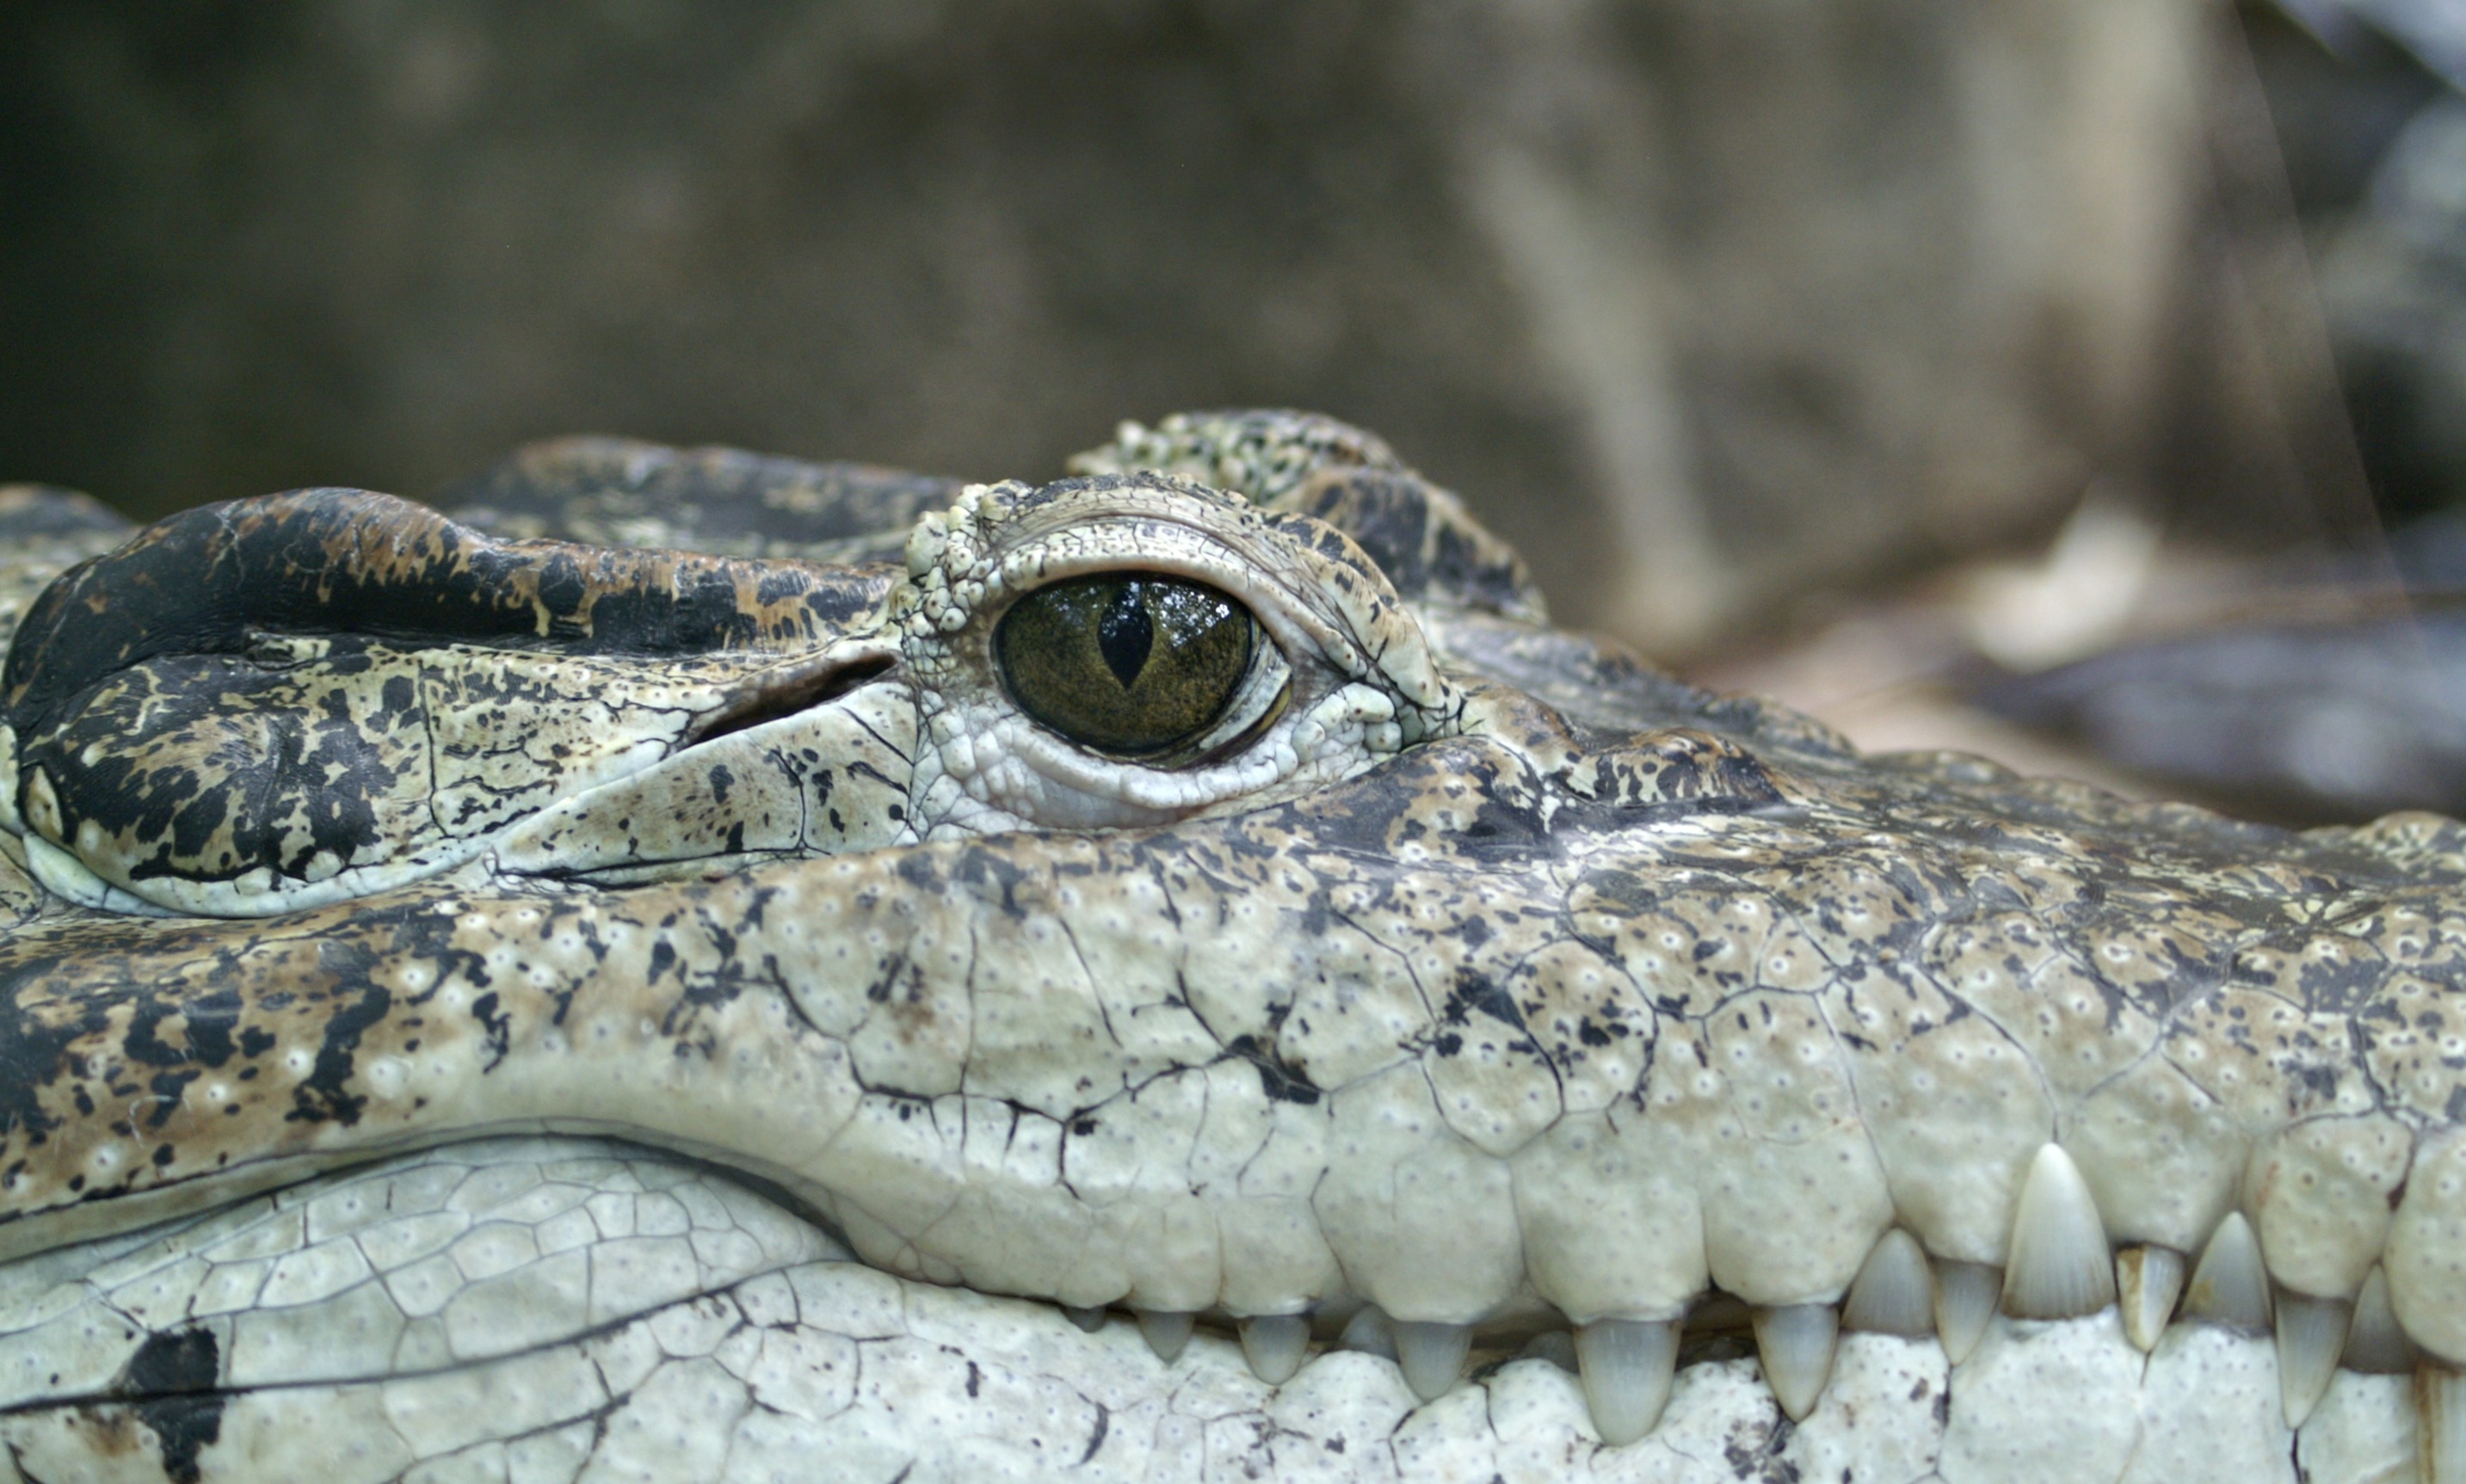 Crocodile close up by 3342